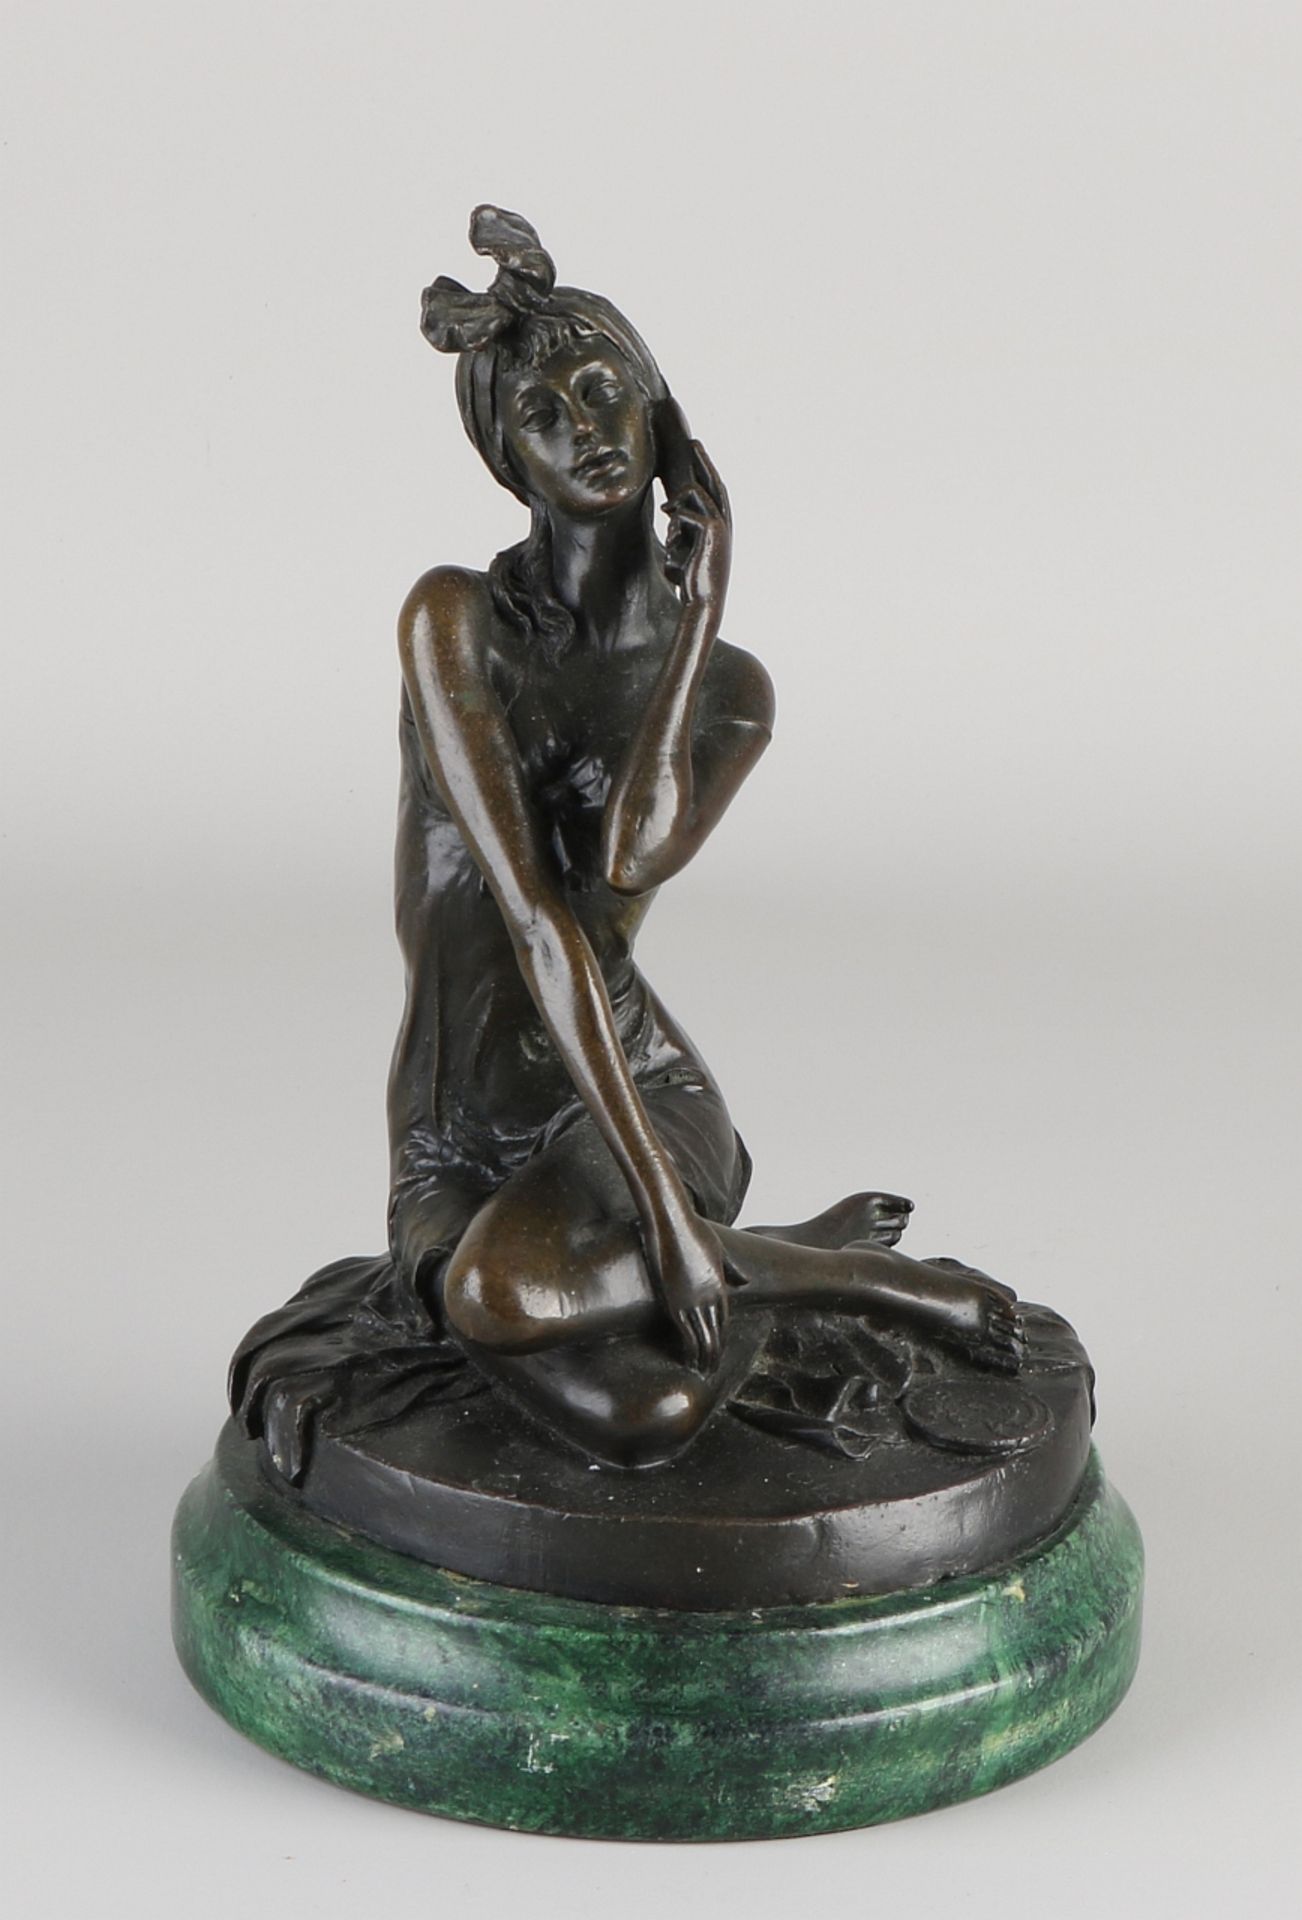 Bronze figure, Woman with telephone